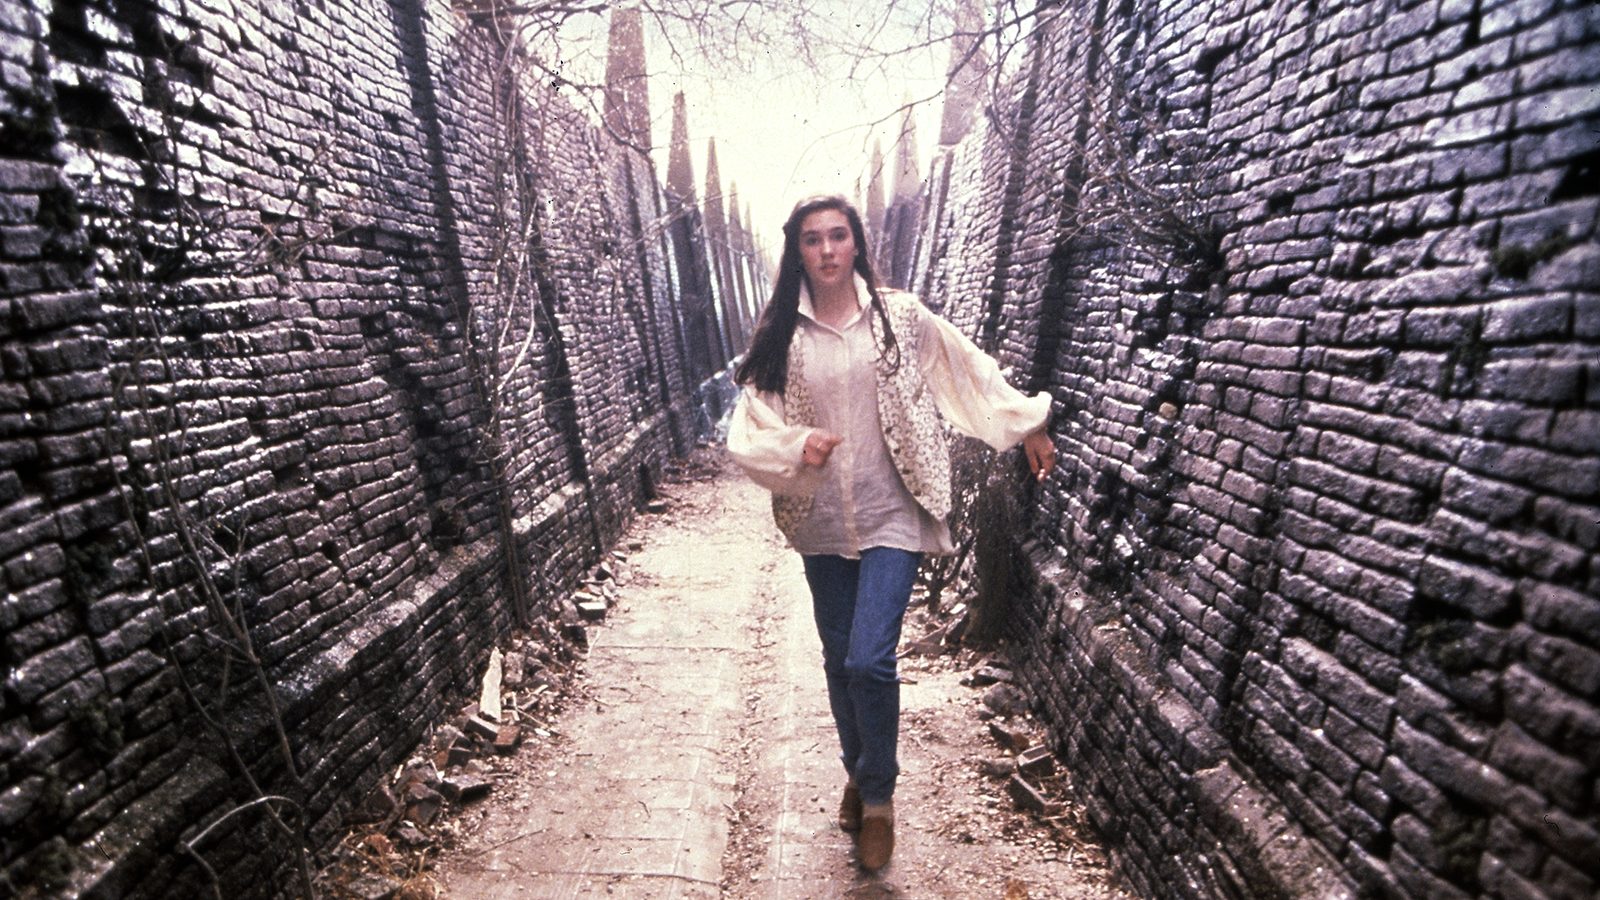 Sarah running through the labyrinth in Labyrinth.